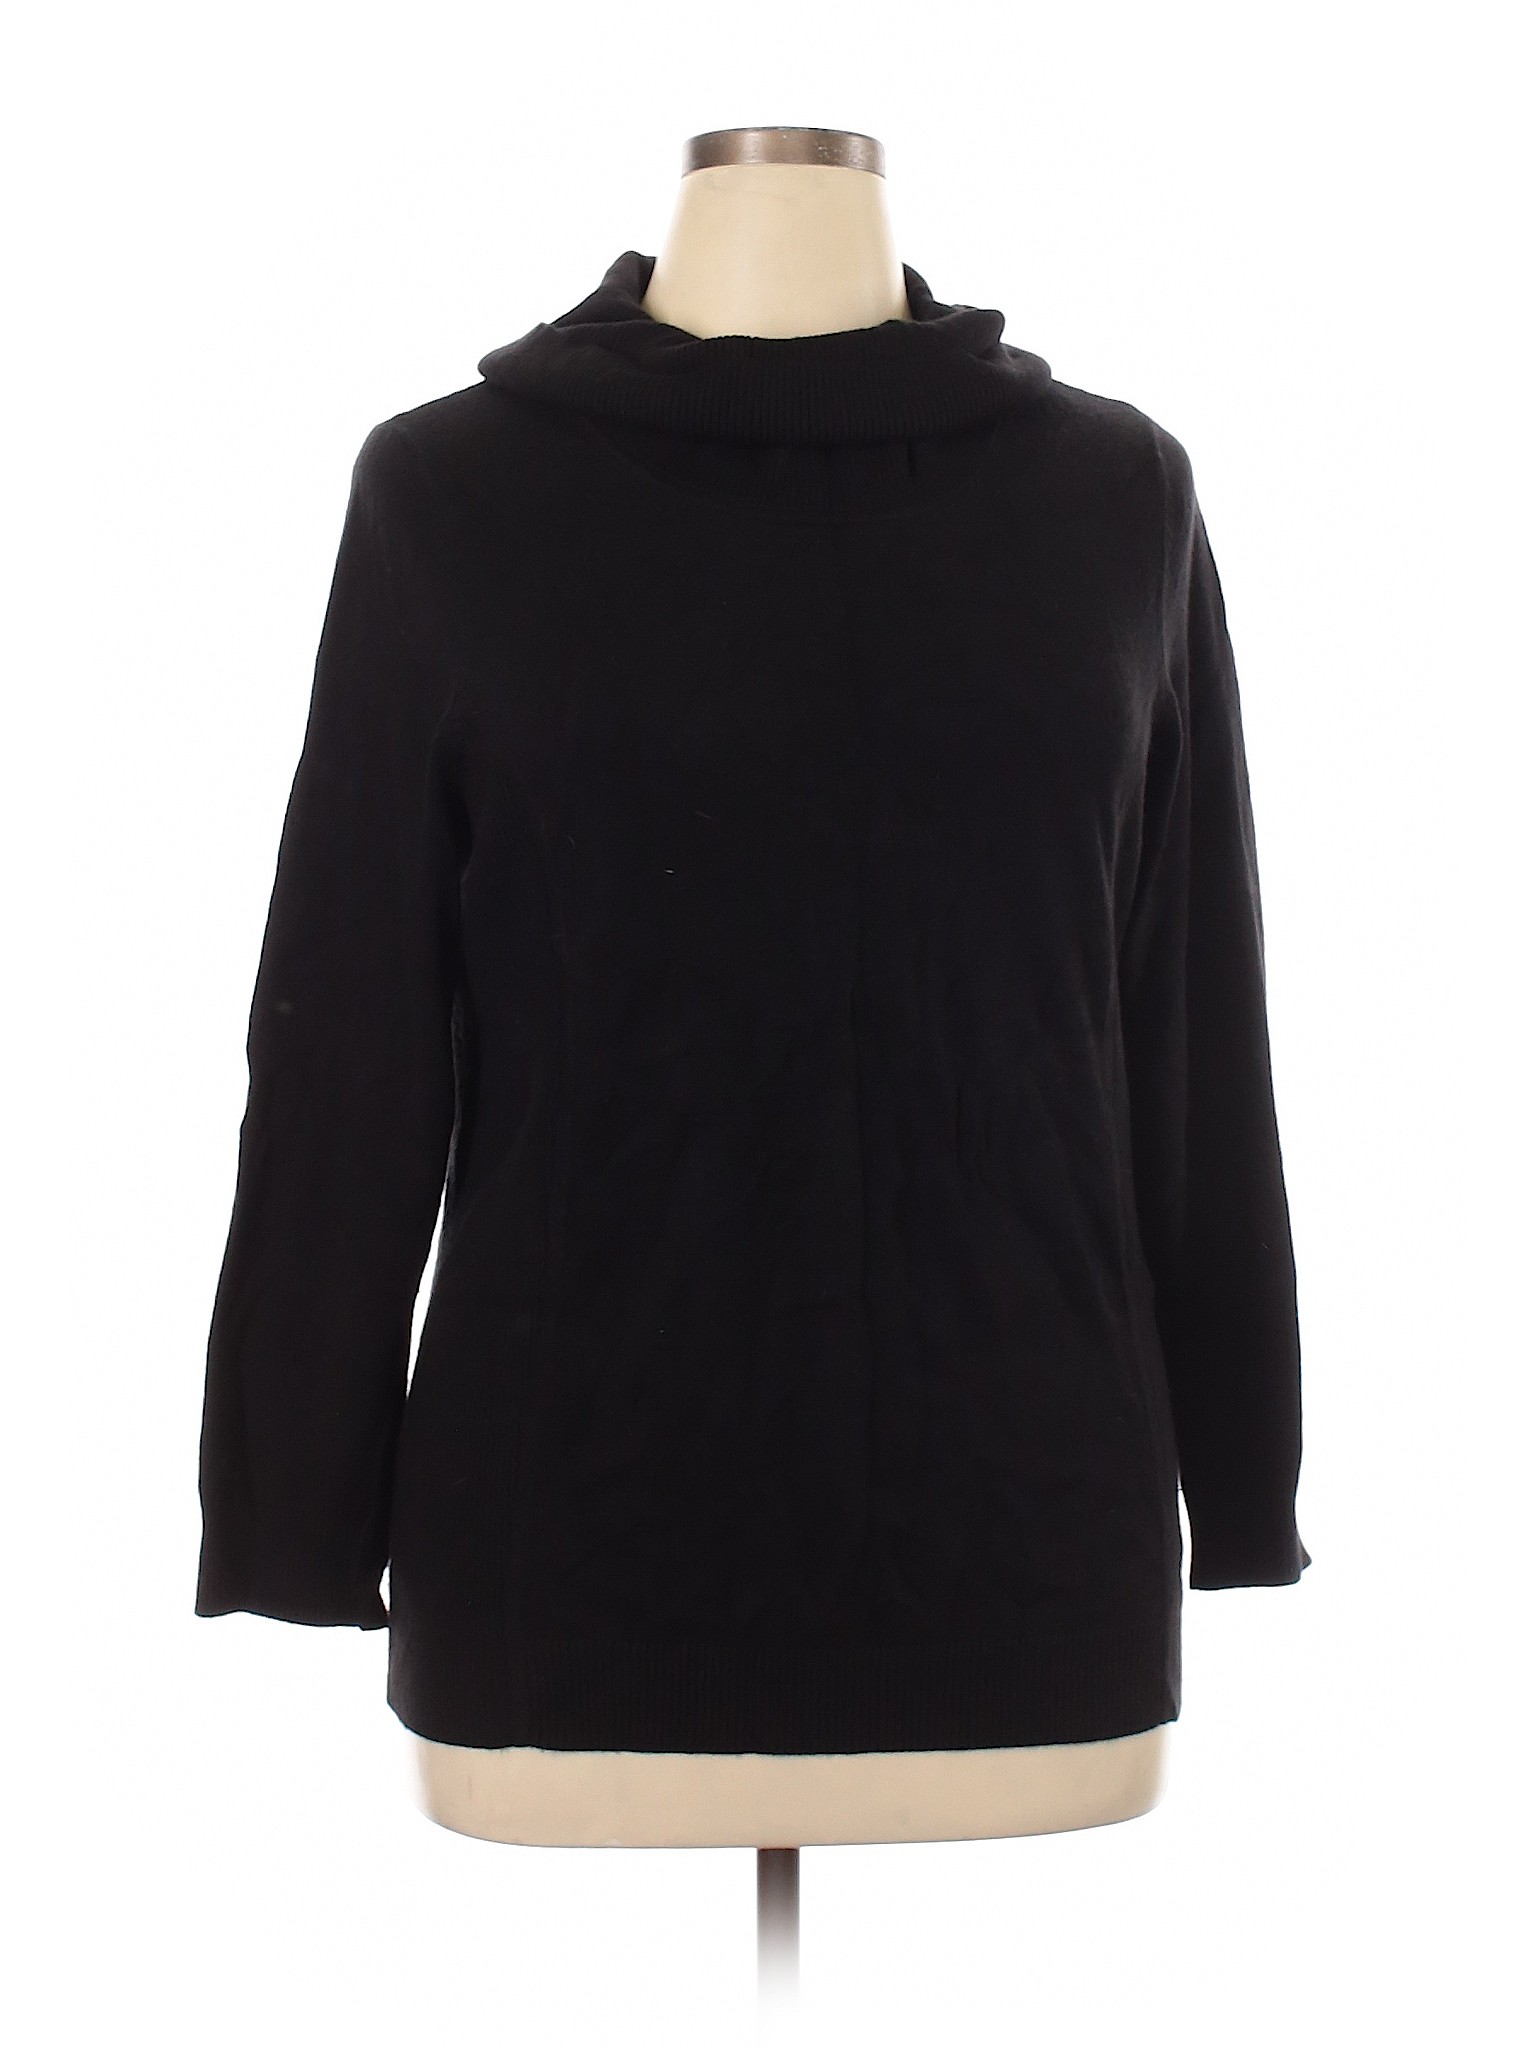 Cj Banks Women Black Pullover Sweater 1X Plus | eBay